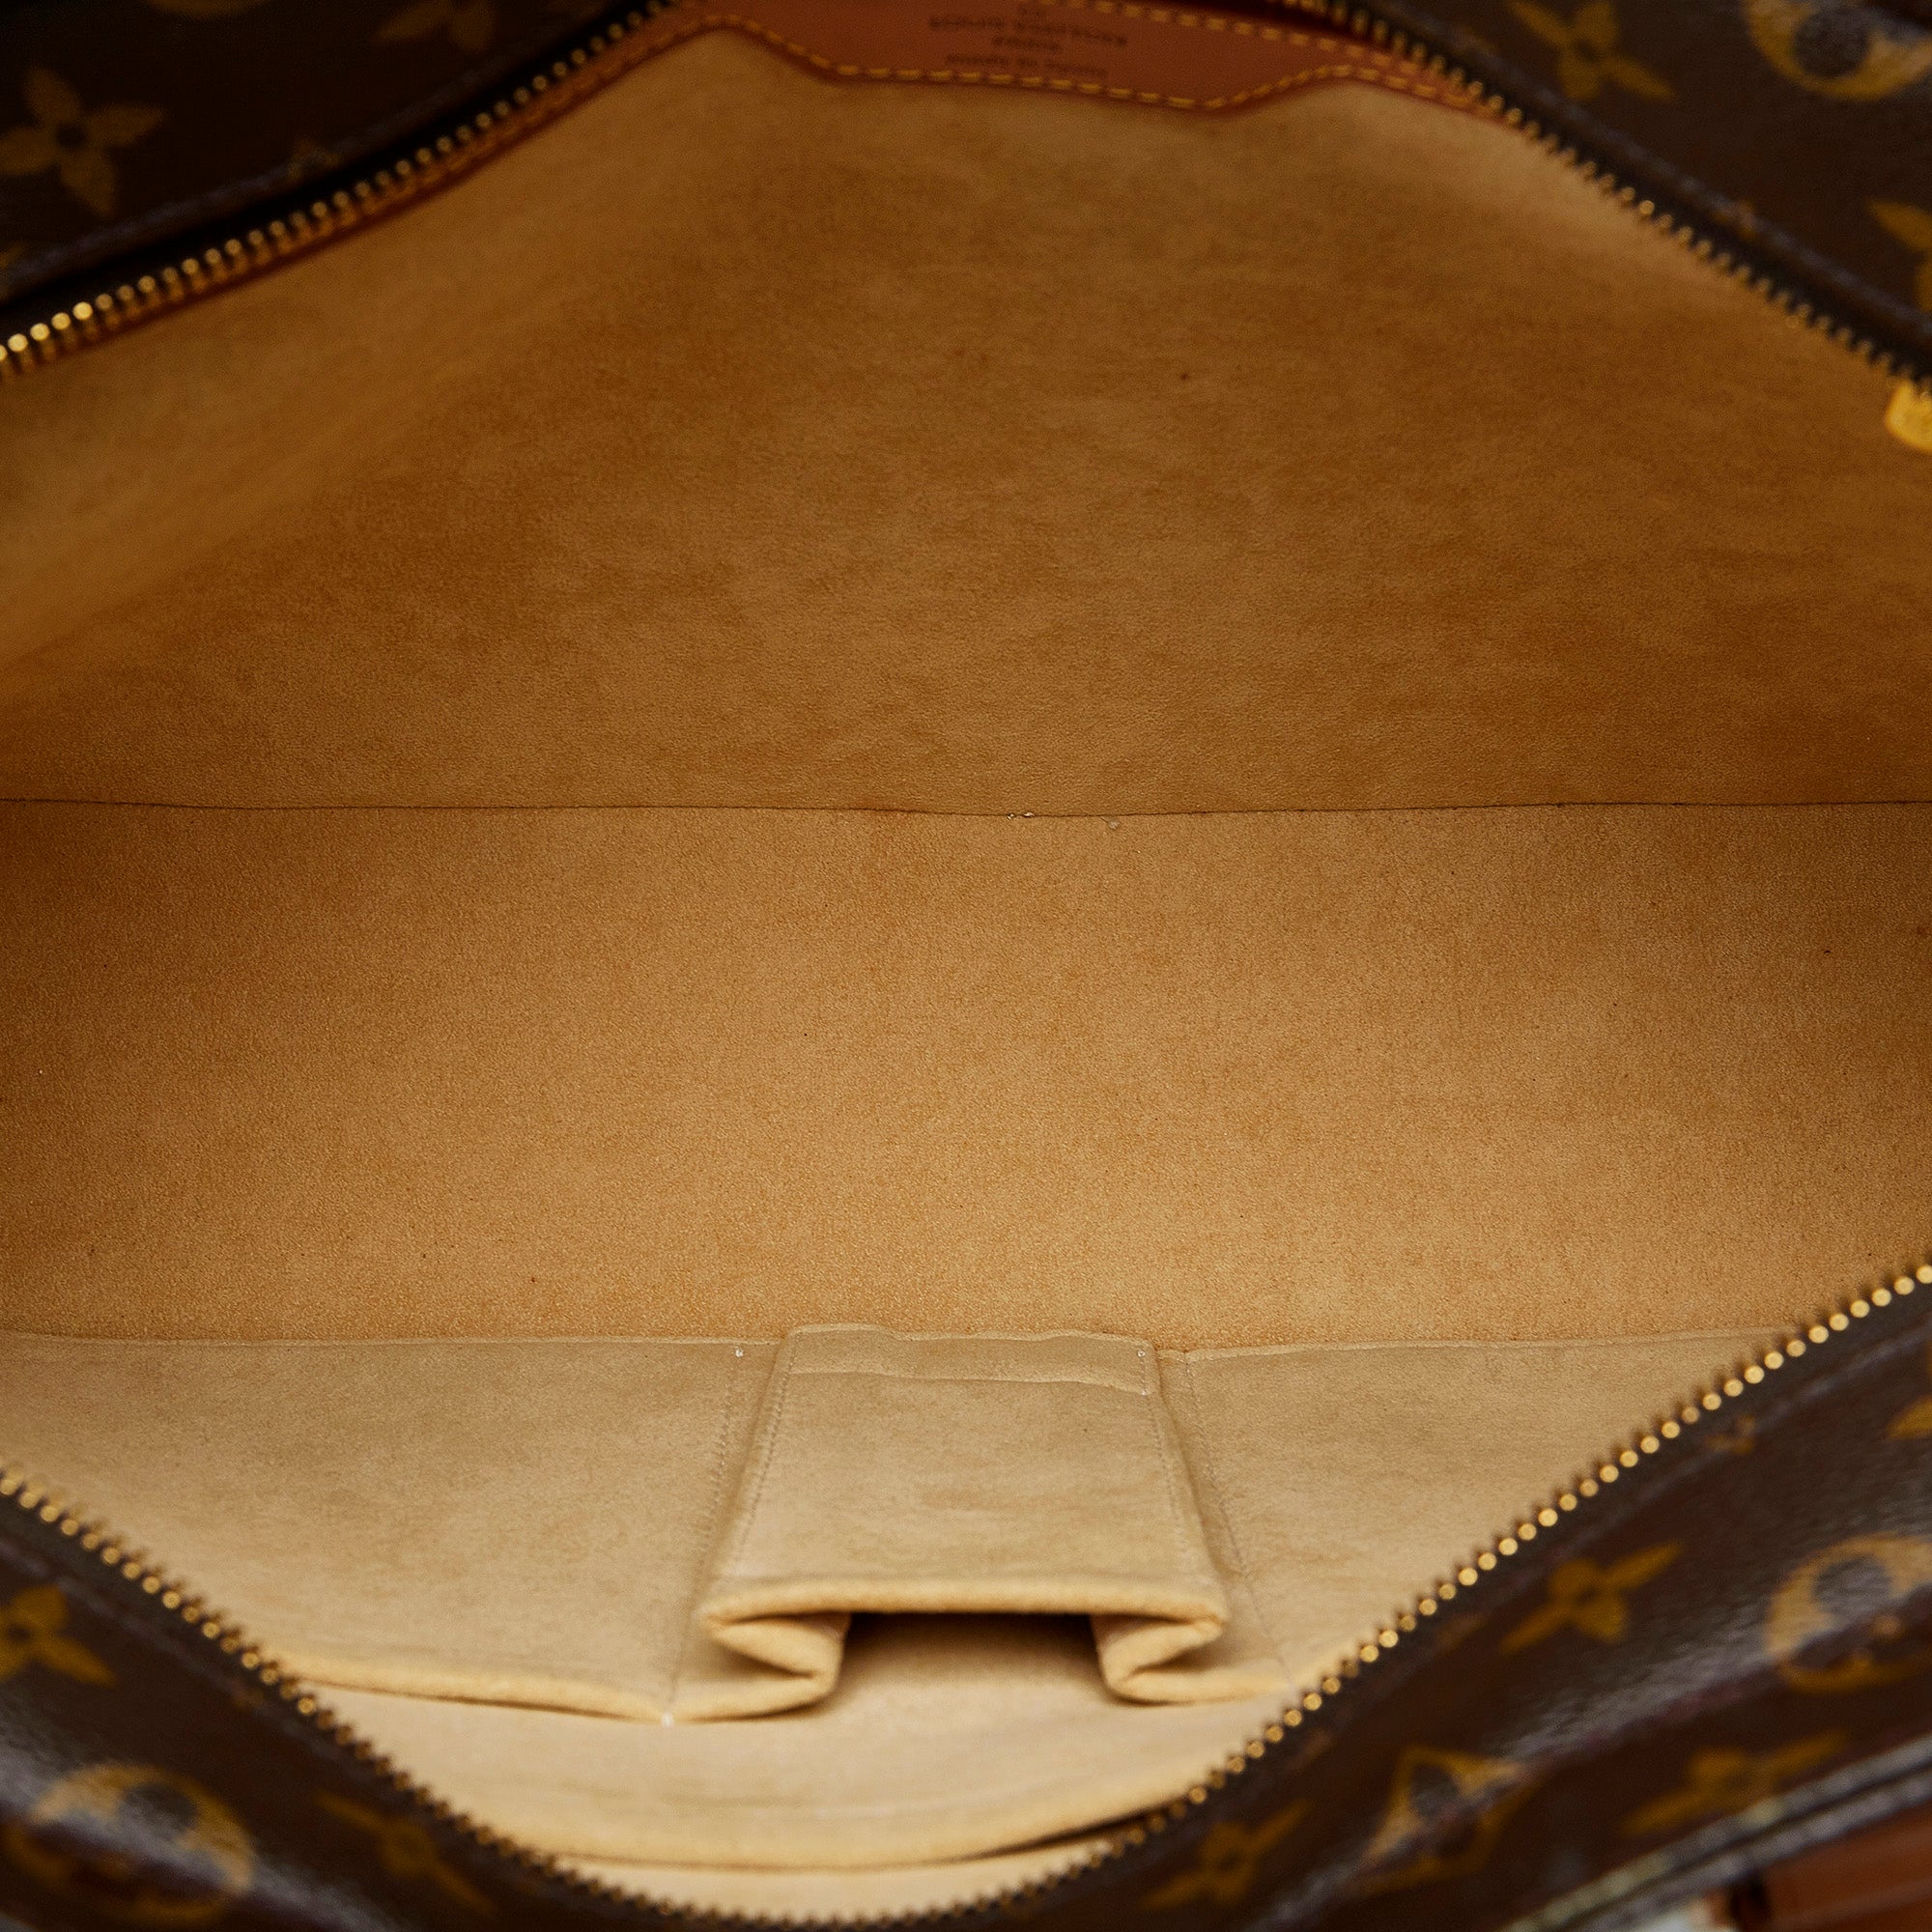 Brown Louis Vuitton Monogram Luco Tote Bag